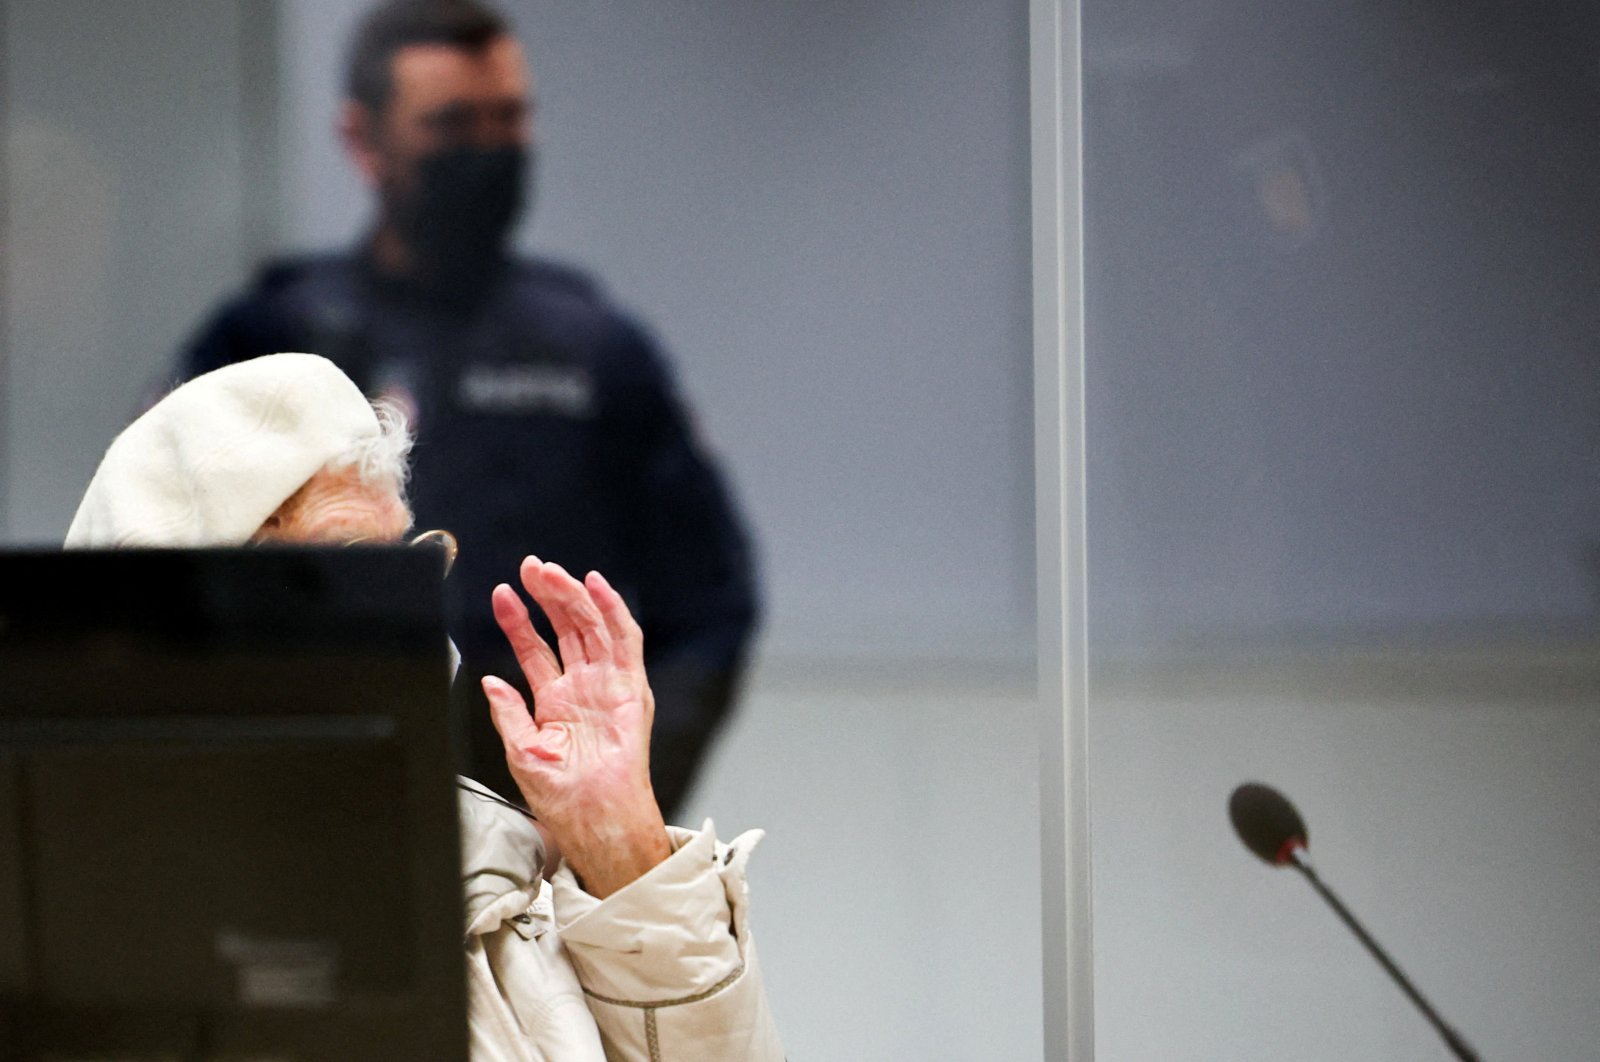 Media Jerman melaporkan keyakinan terhadap wanita Nazi berusia 97 tahun